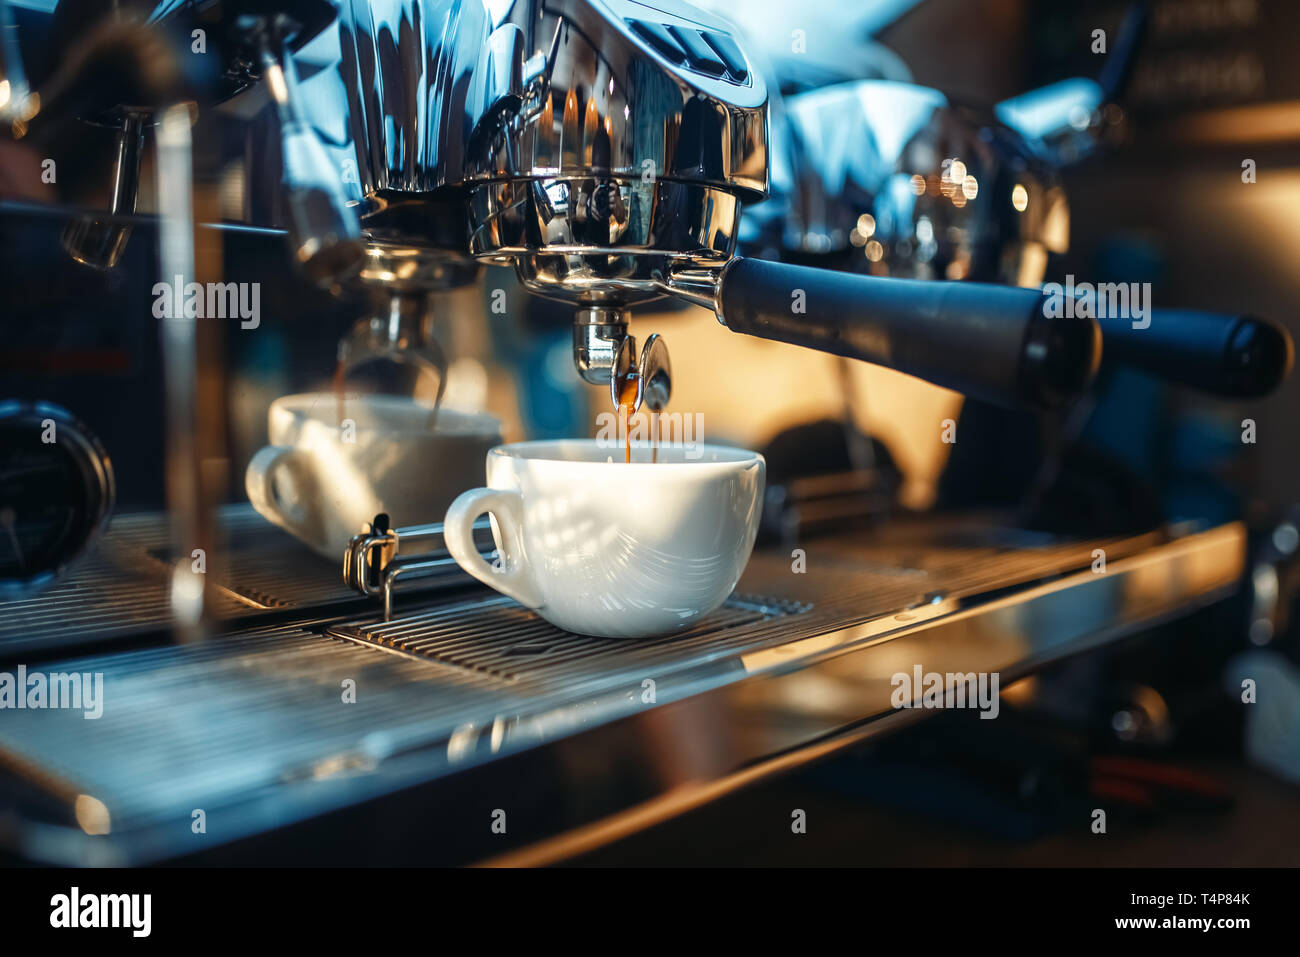 Espresso machine pours fresh black coffee into the cup closeup